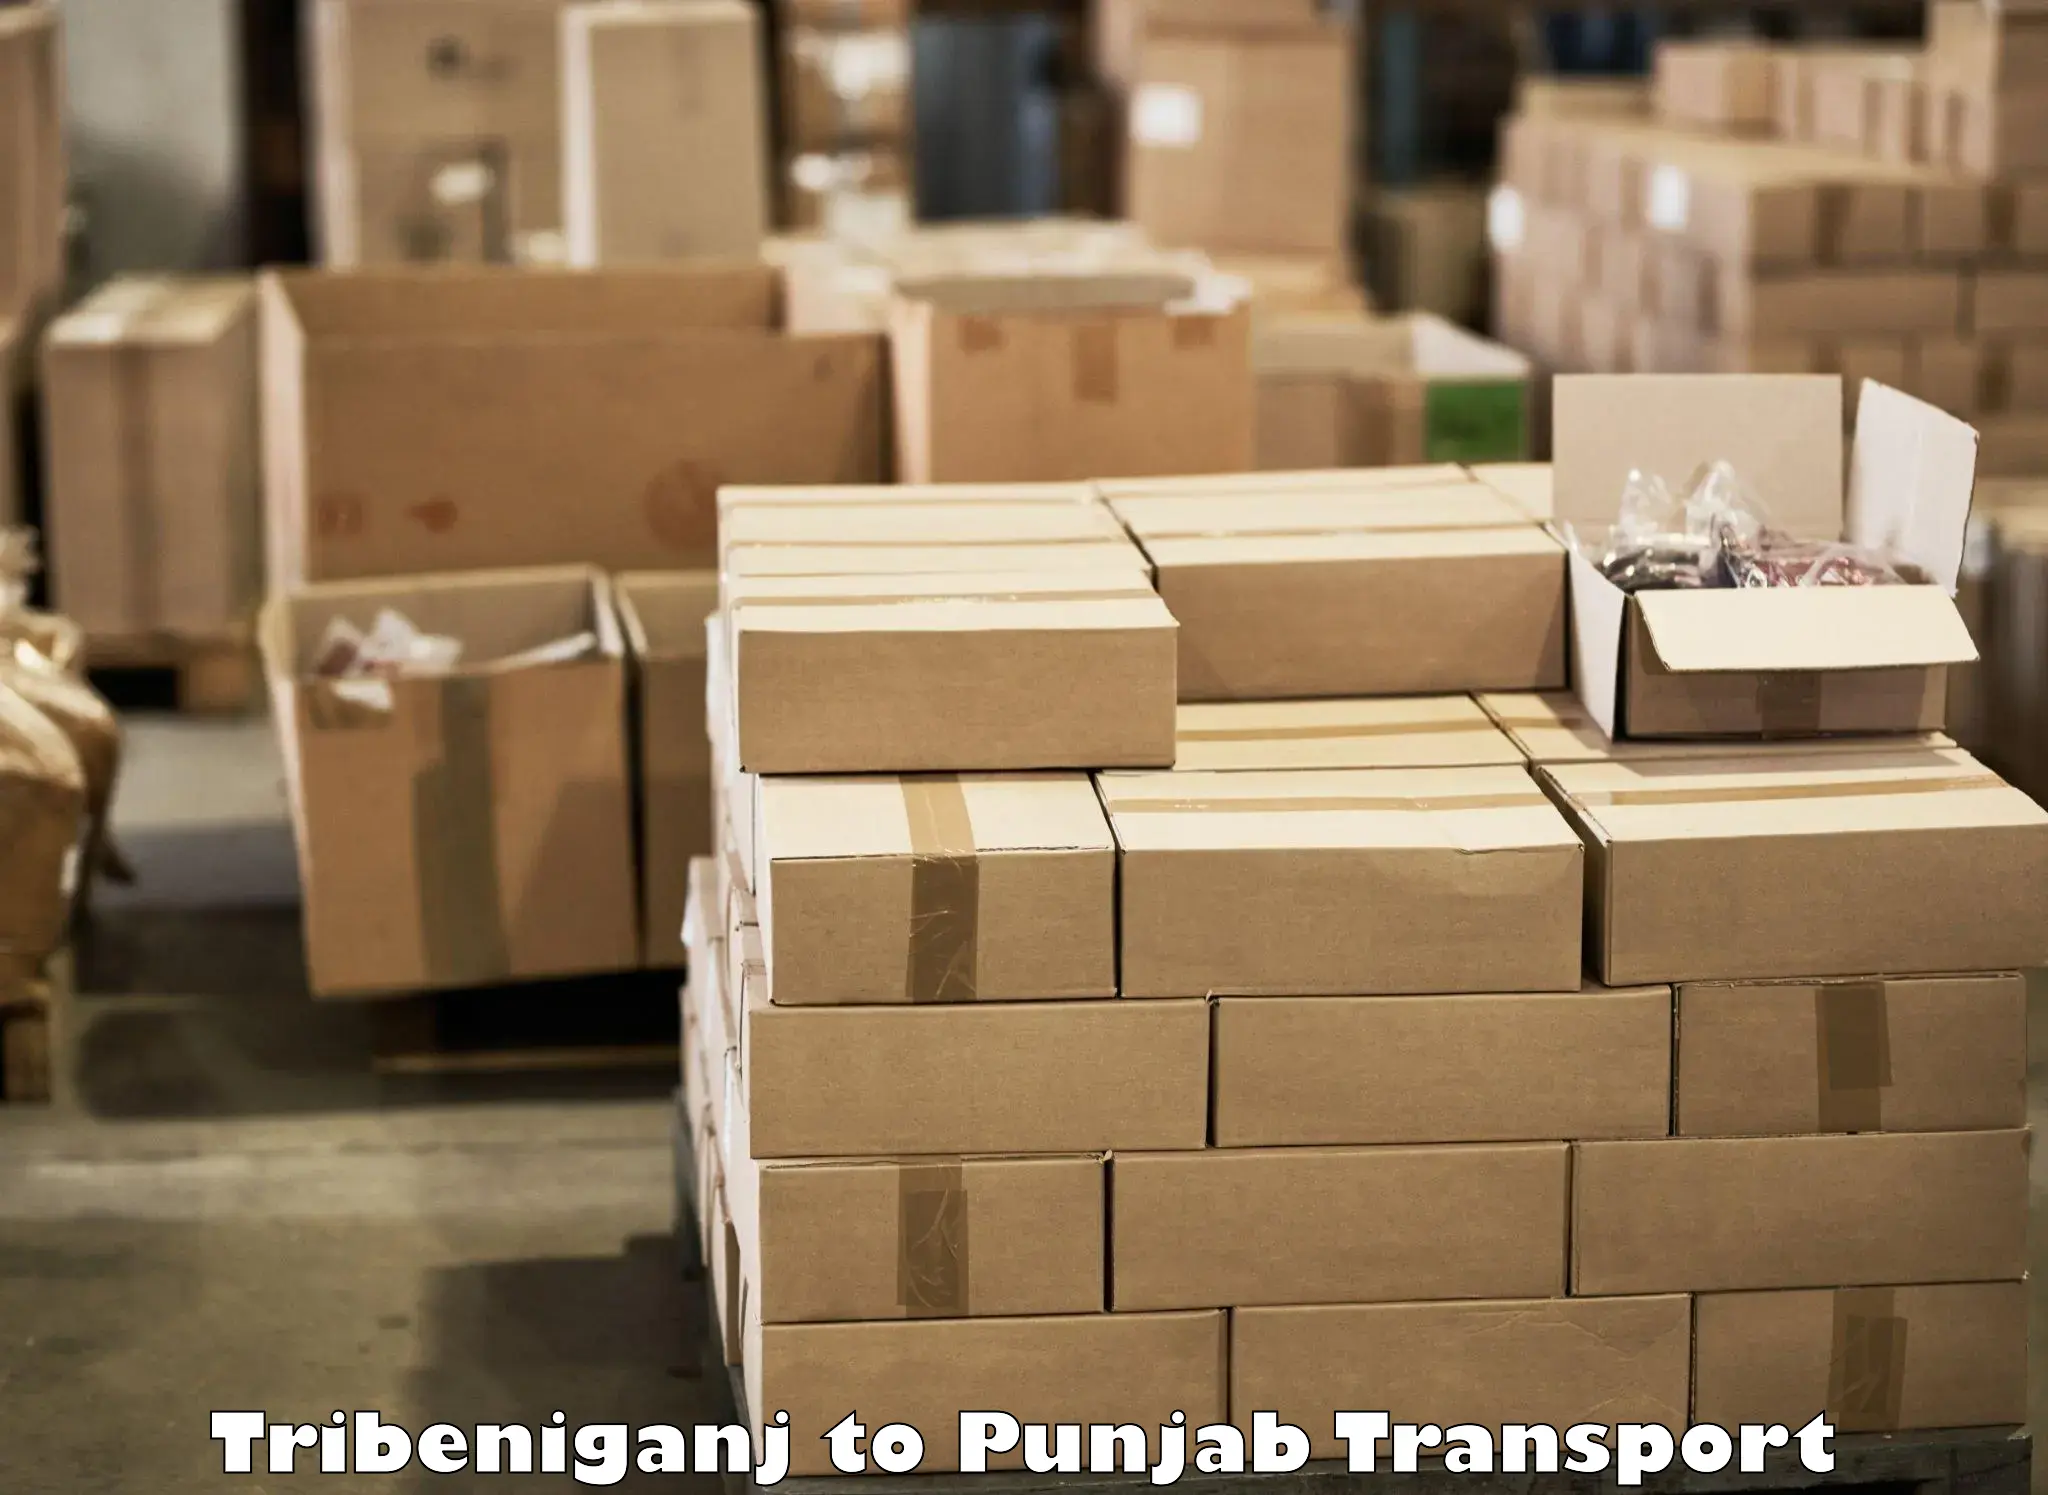 Goods delivery service Tribeniganj to Faridkot